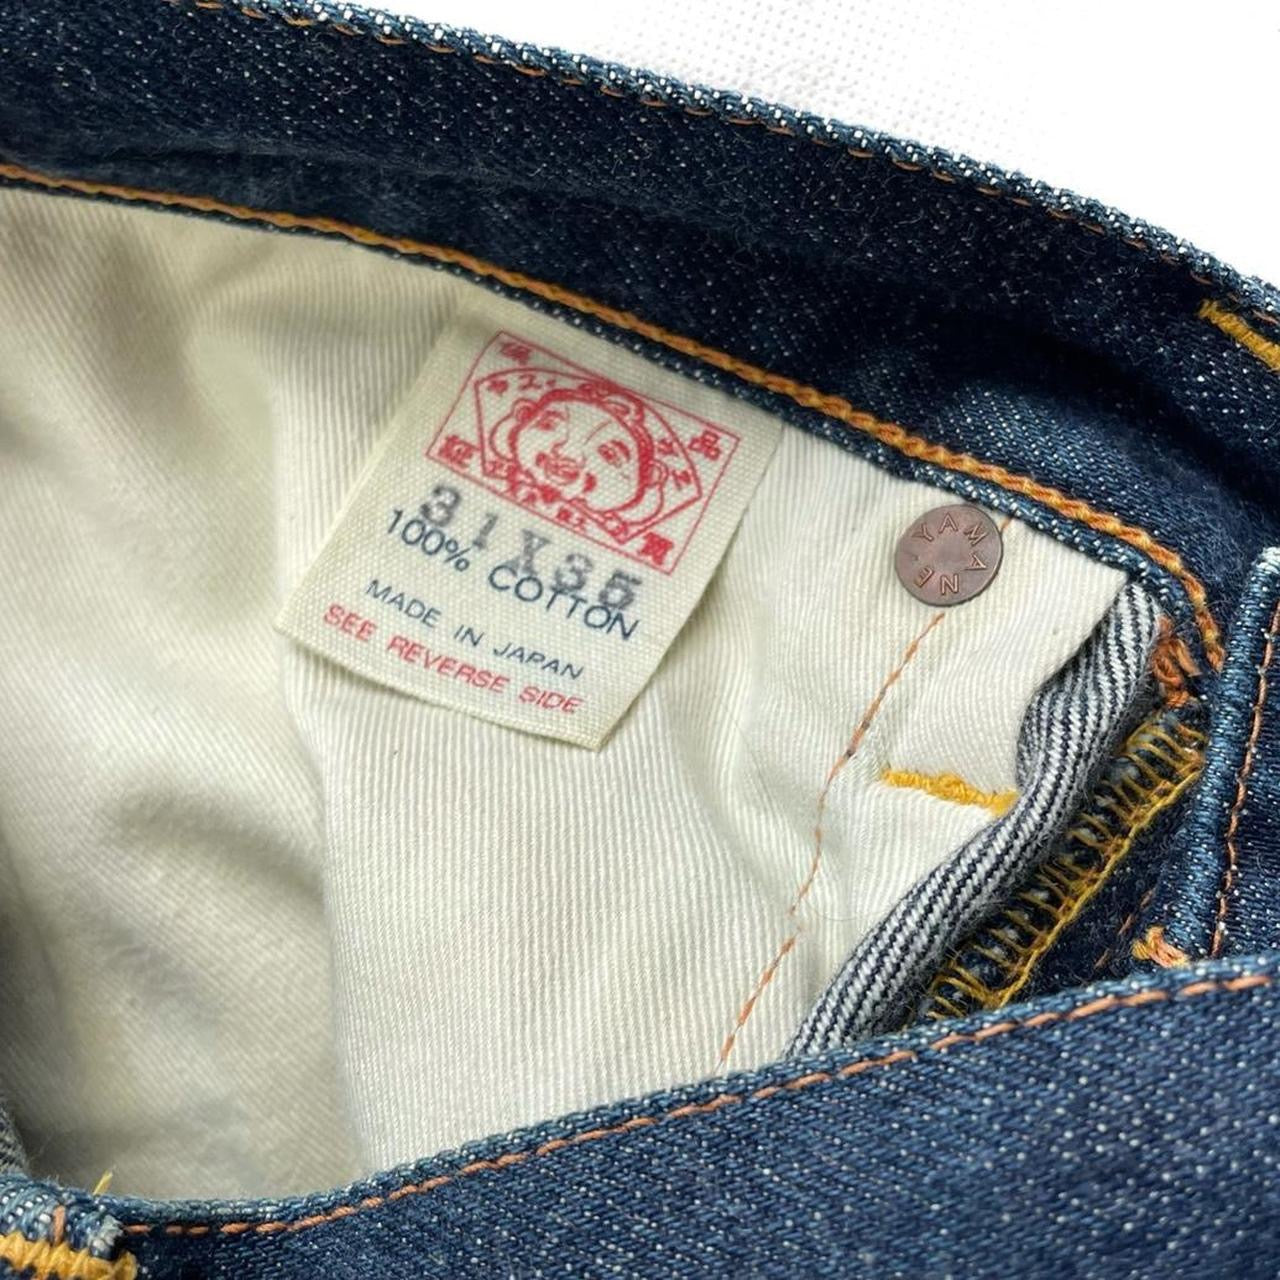 Evisu Selvedge Jeans With Catch & Release Daicock ( W31 )